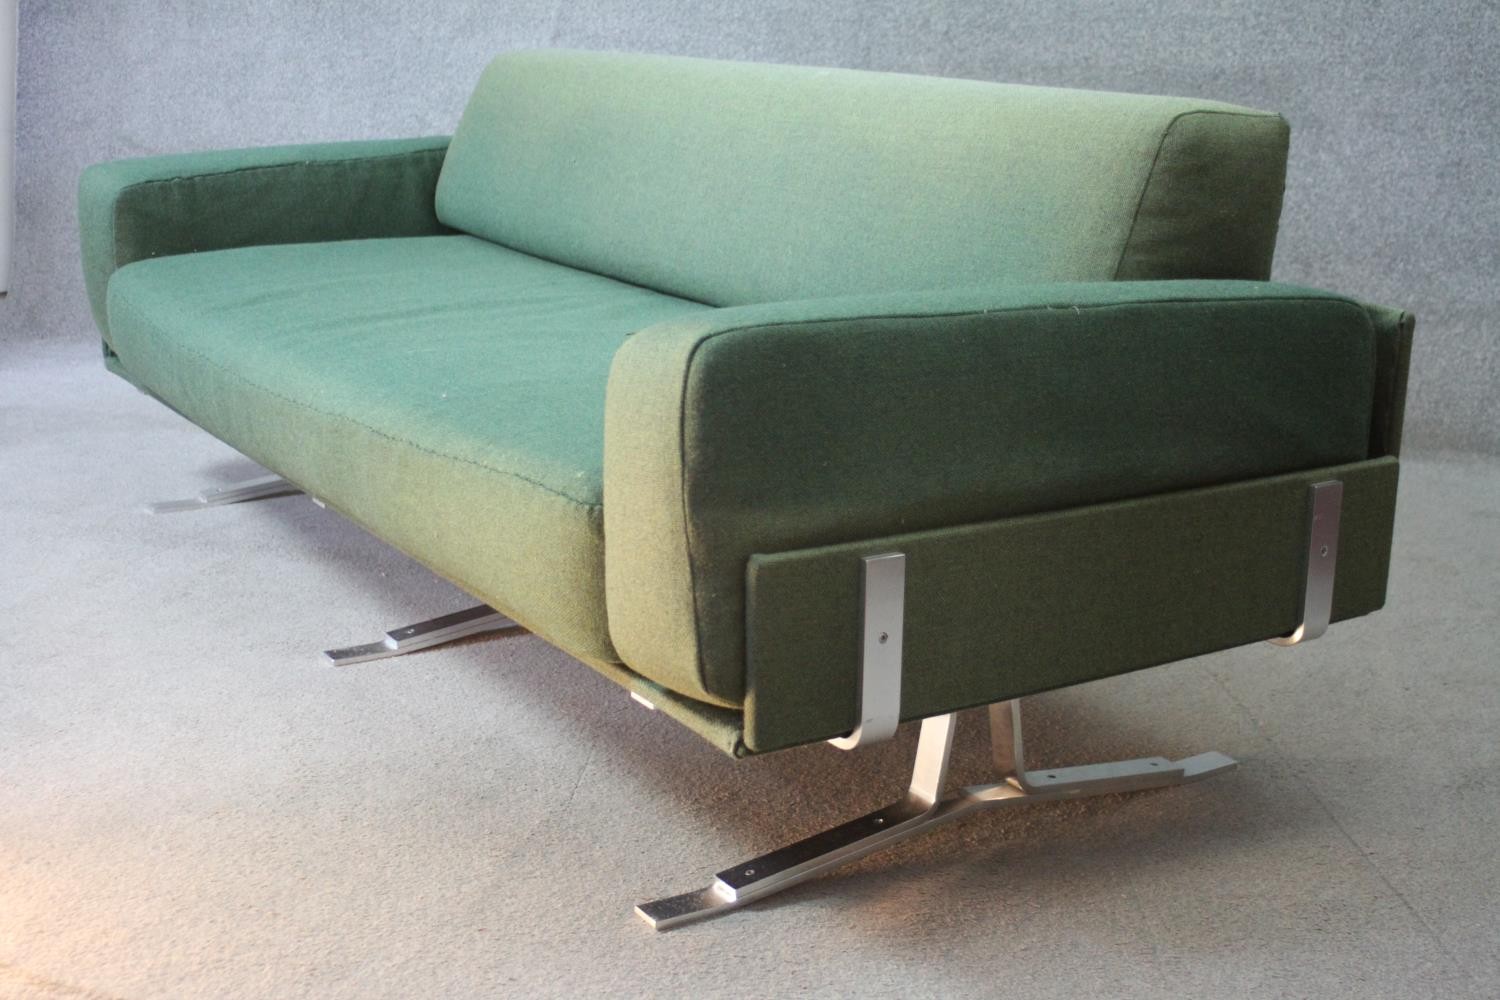 A William Plunkett sofa C.1960 in original Harris Tweed upholstery on polished aluminium frame. - Image 6 of 7